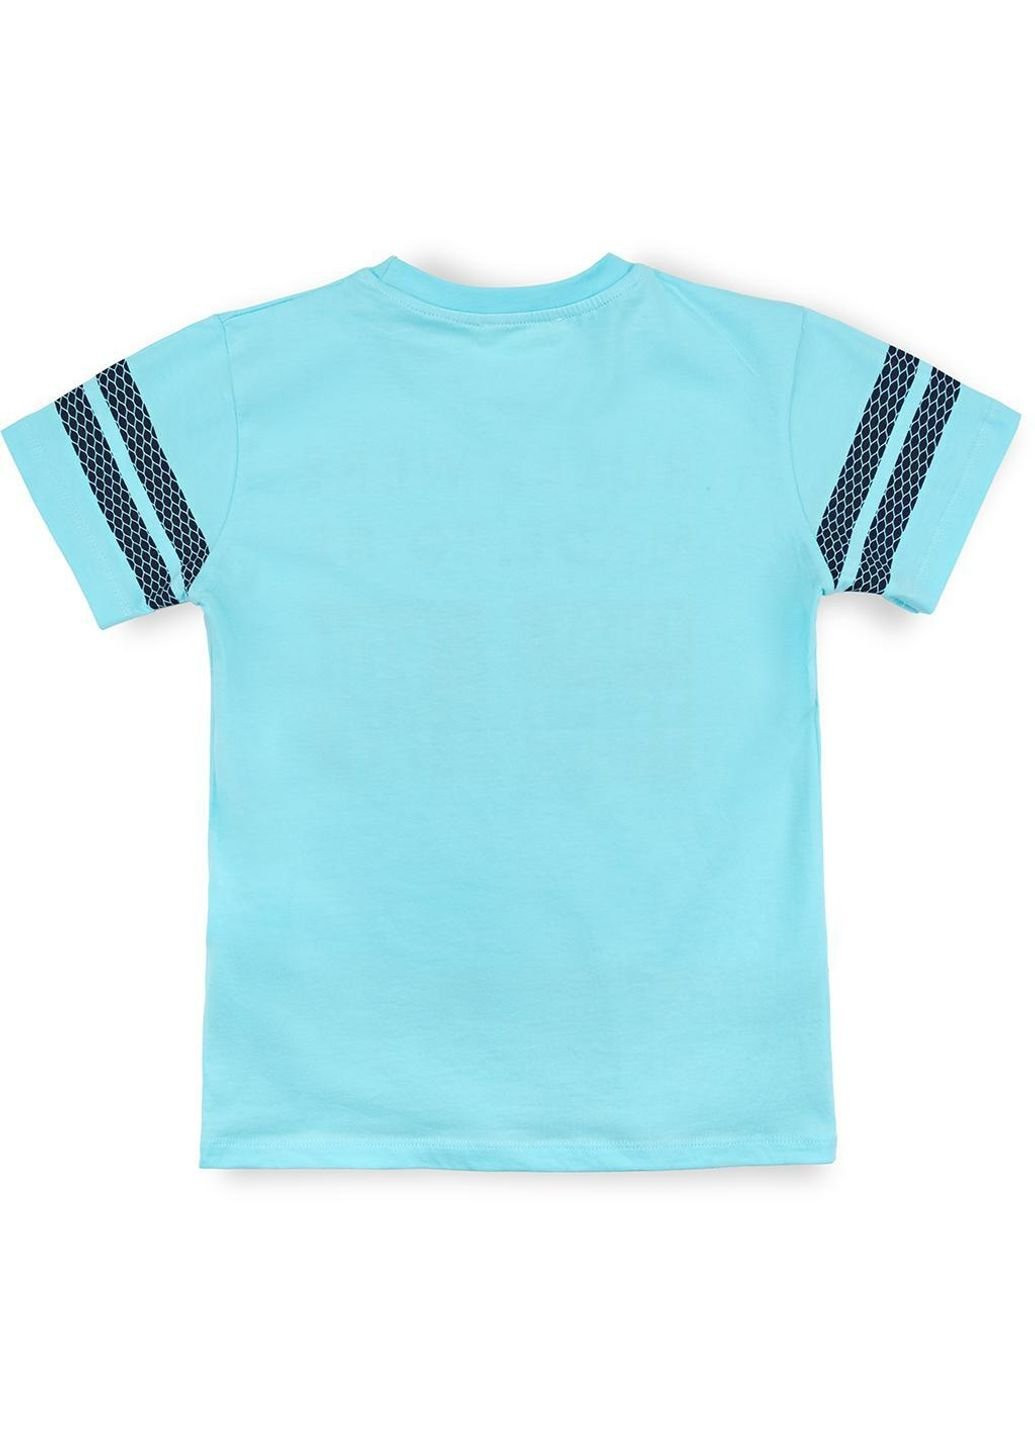 Голубая демисезонная футболка детская "every thing you like" (10980-134b-blue) Breeze